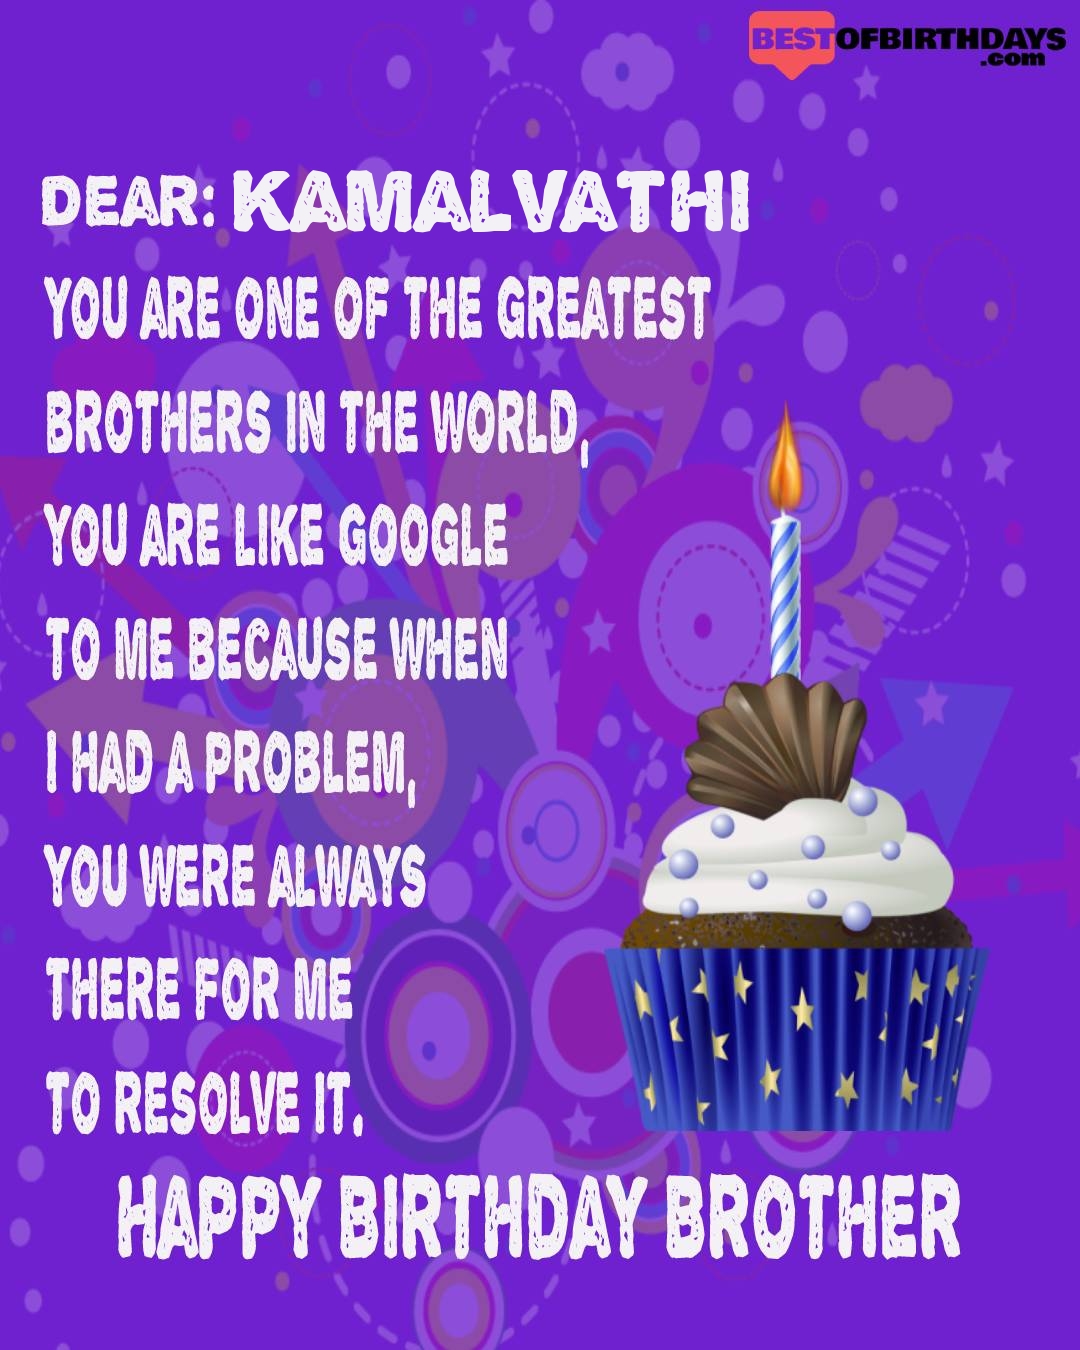 Happy birthday kamalvathi bhai brother bro